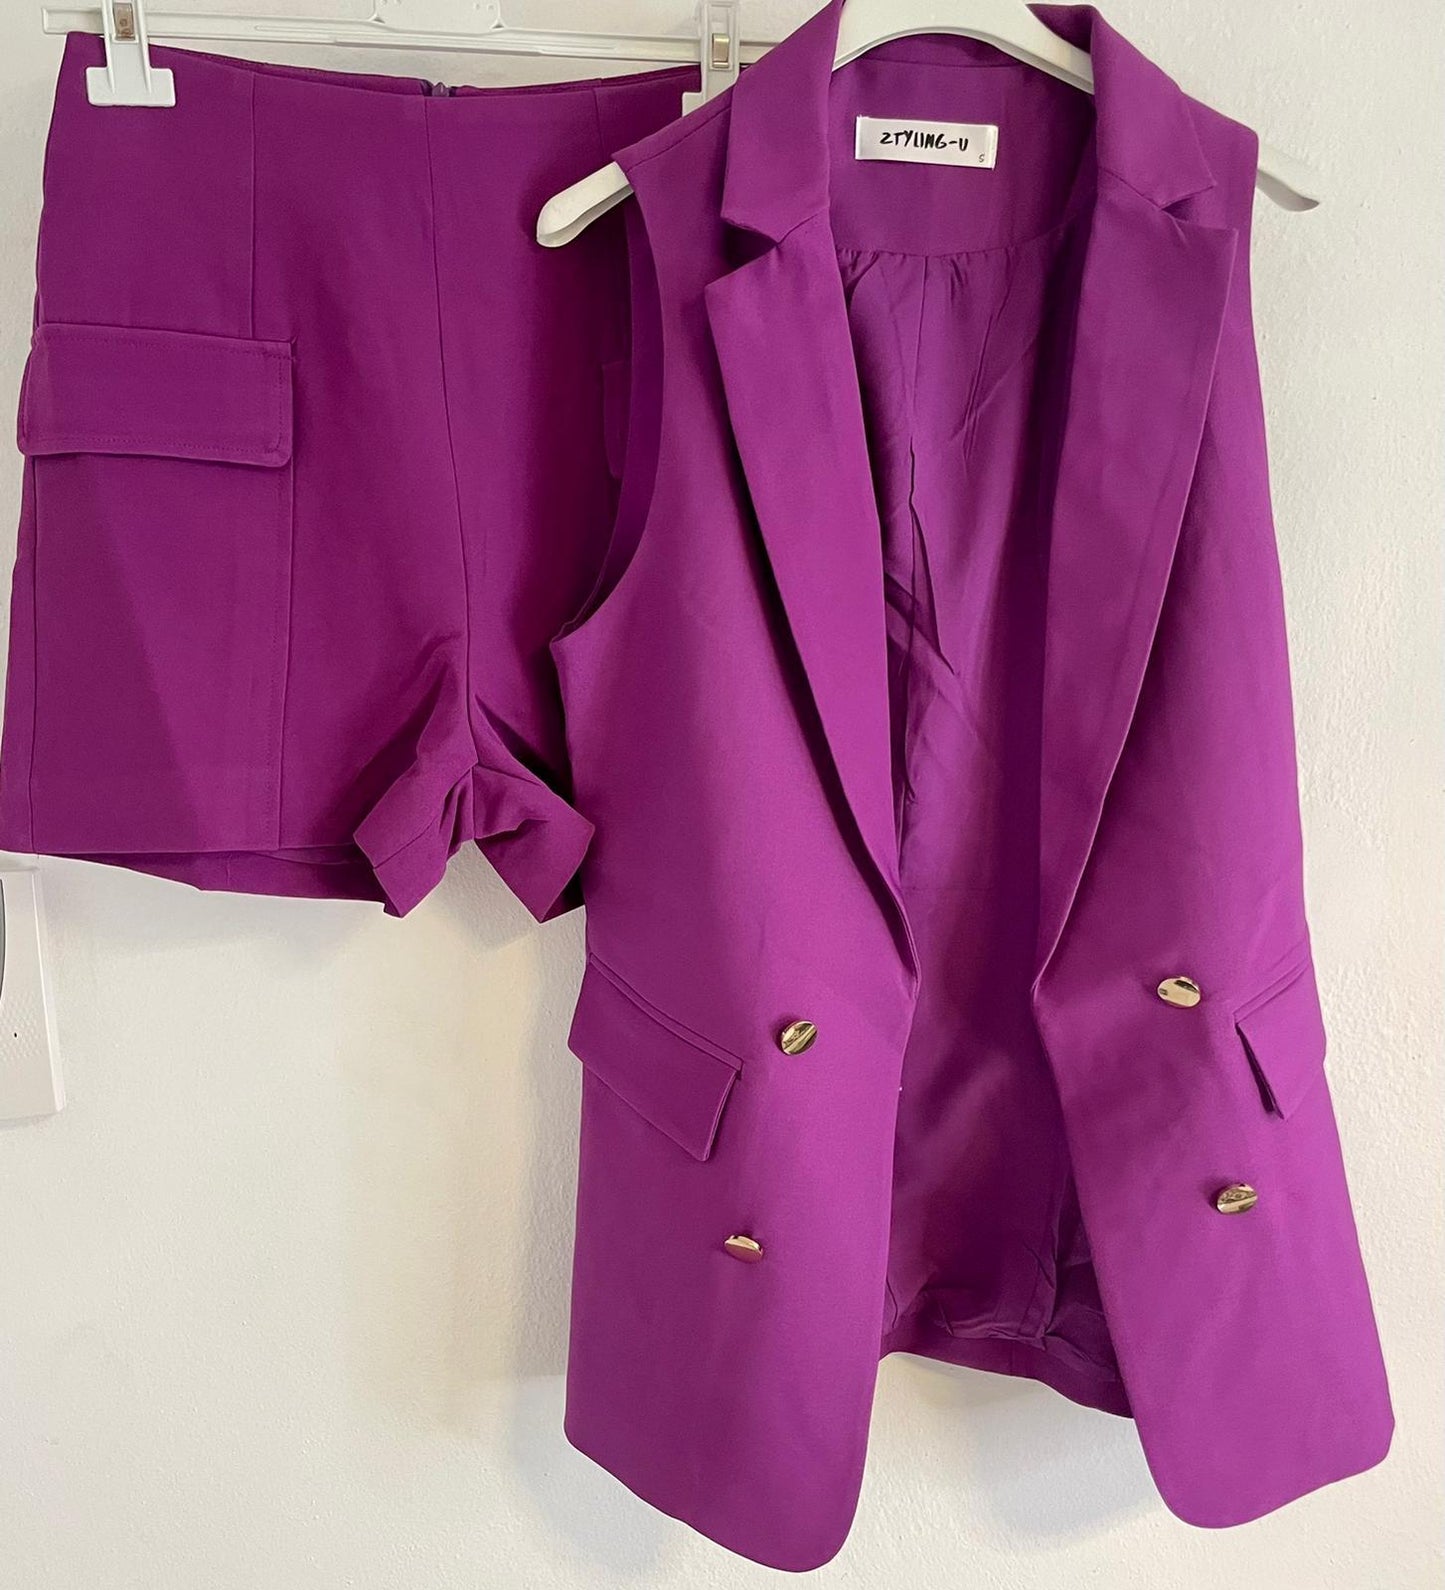 Purple vest. Short sold separately